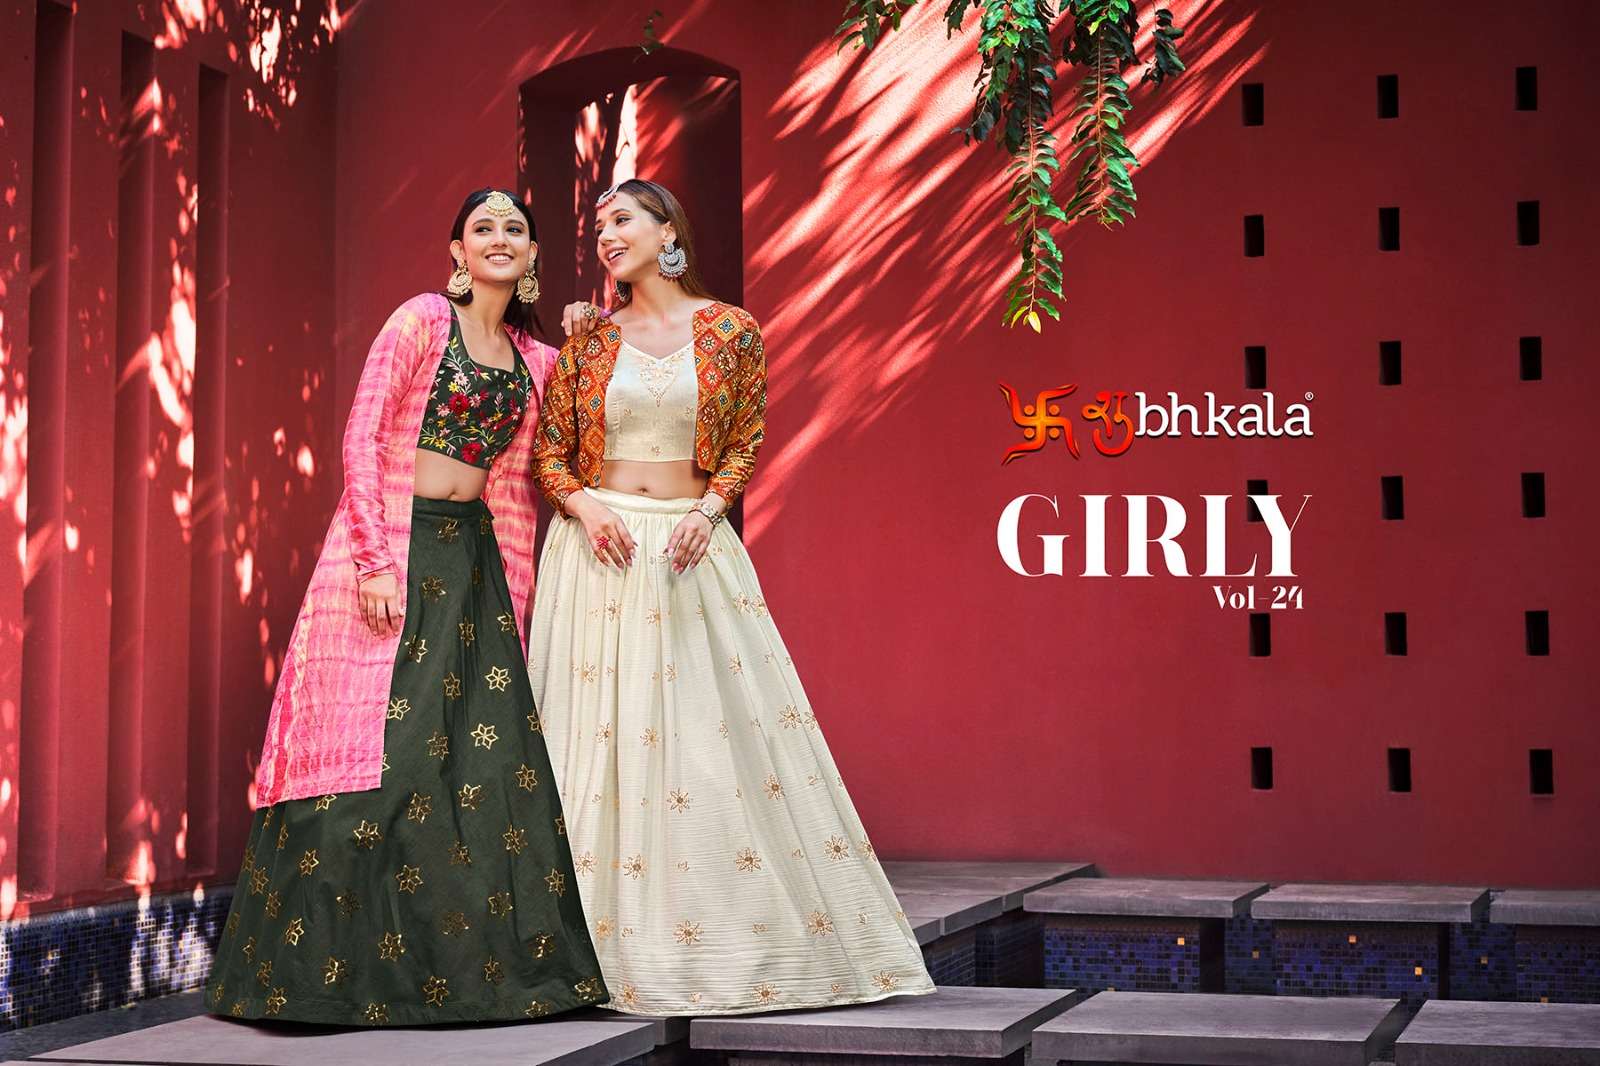 Shubhkala Girly Vol 24 Designer Girly Look New Lehenga Choli Collection